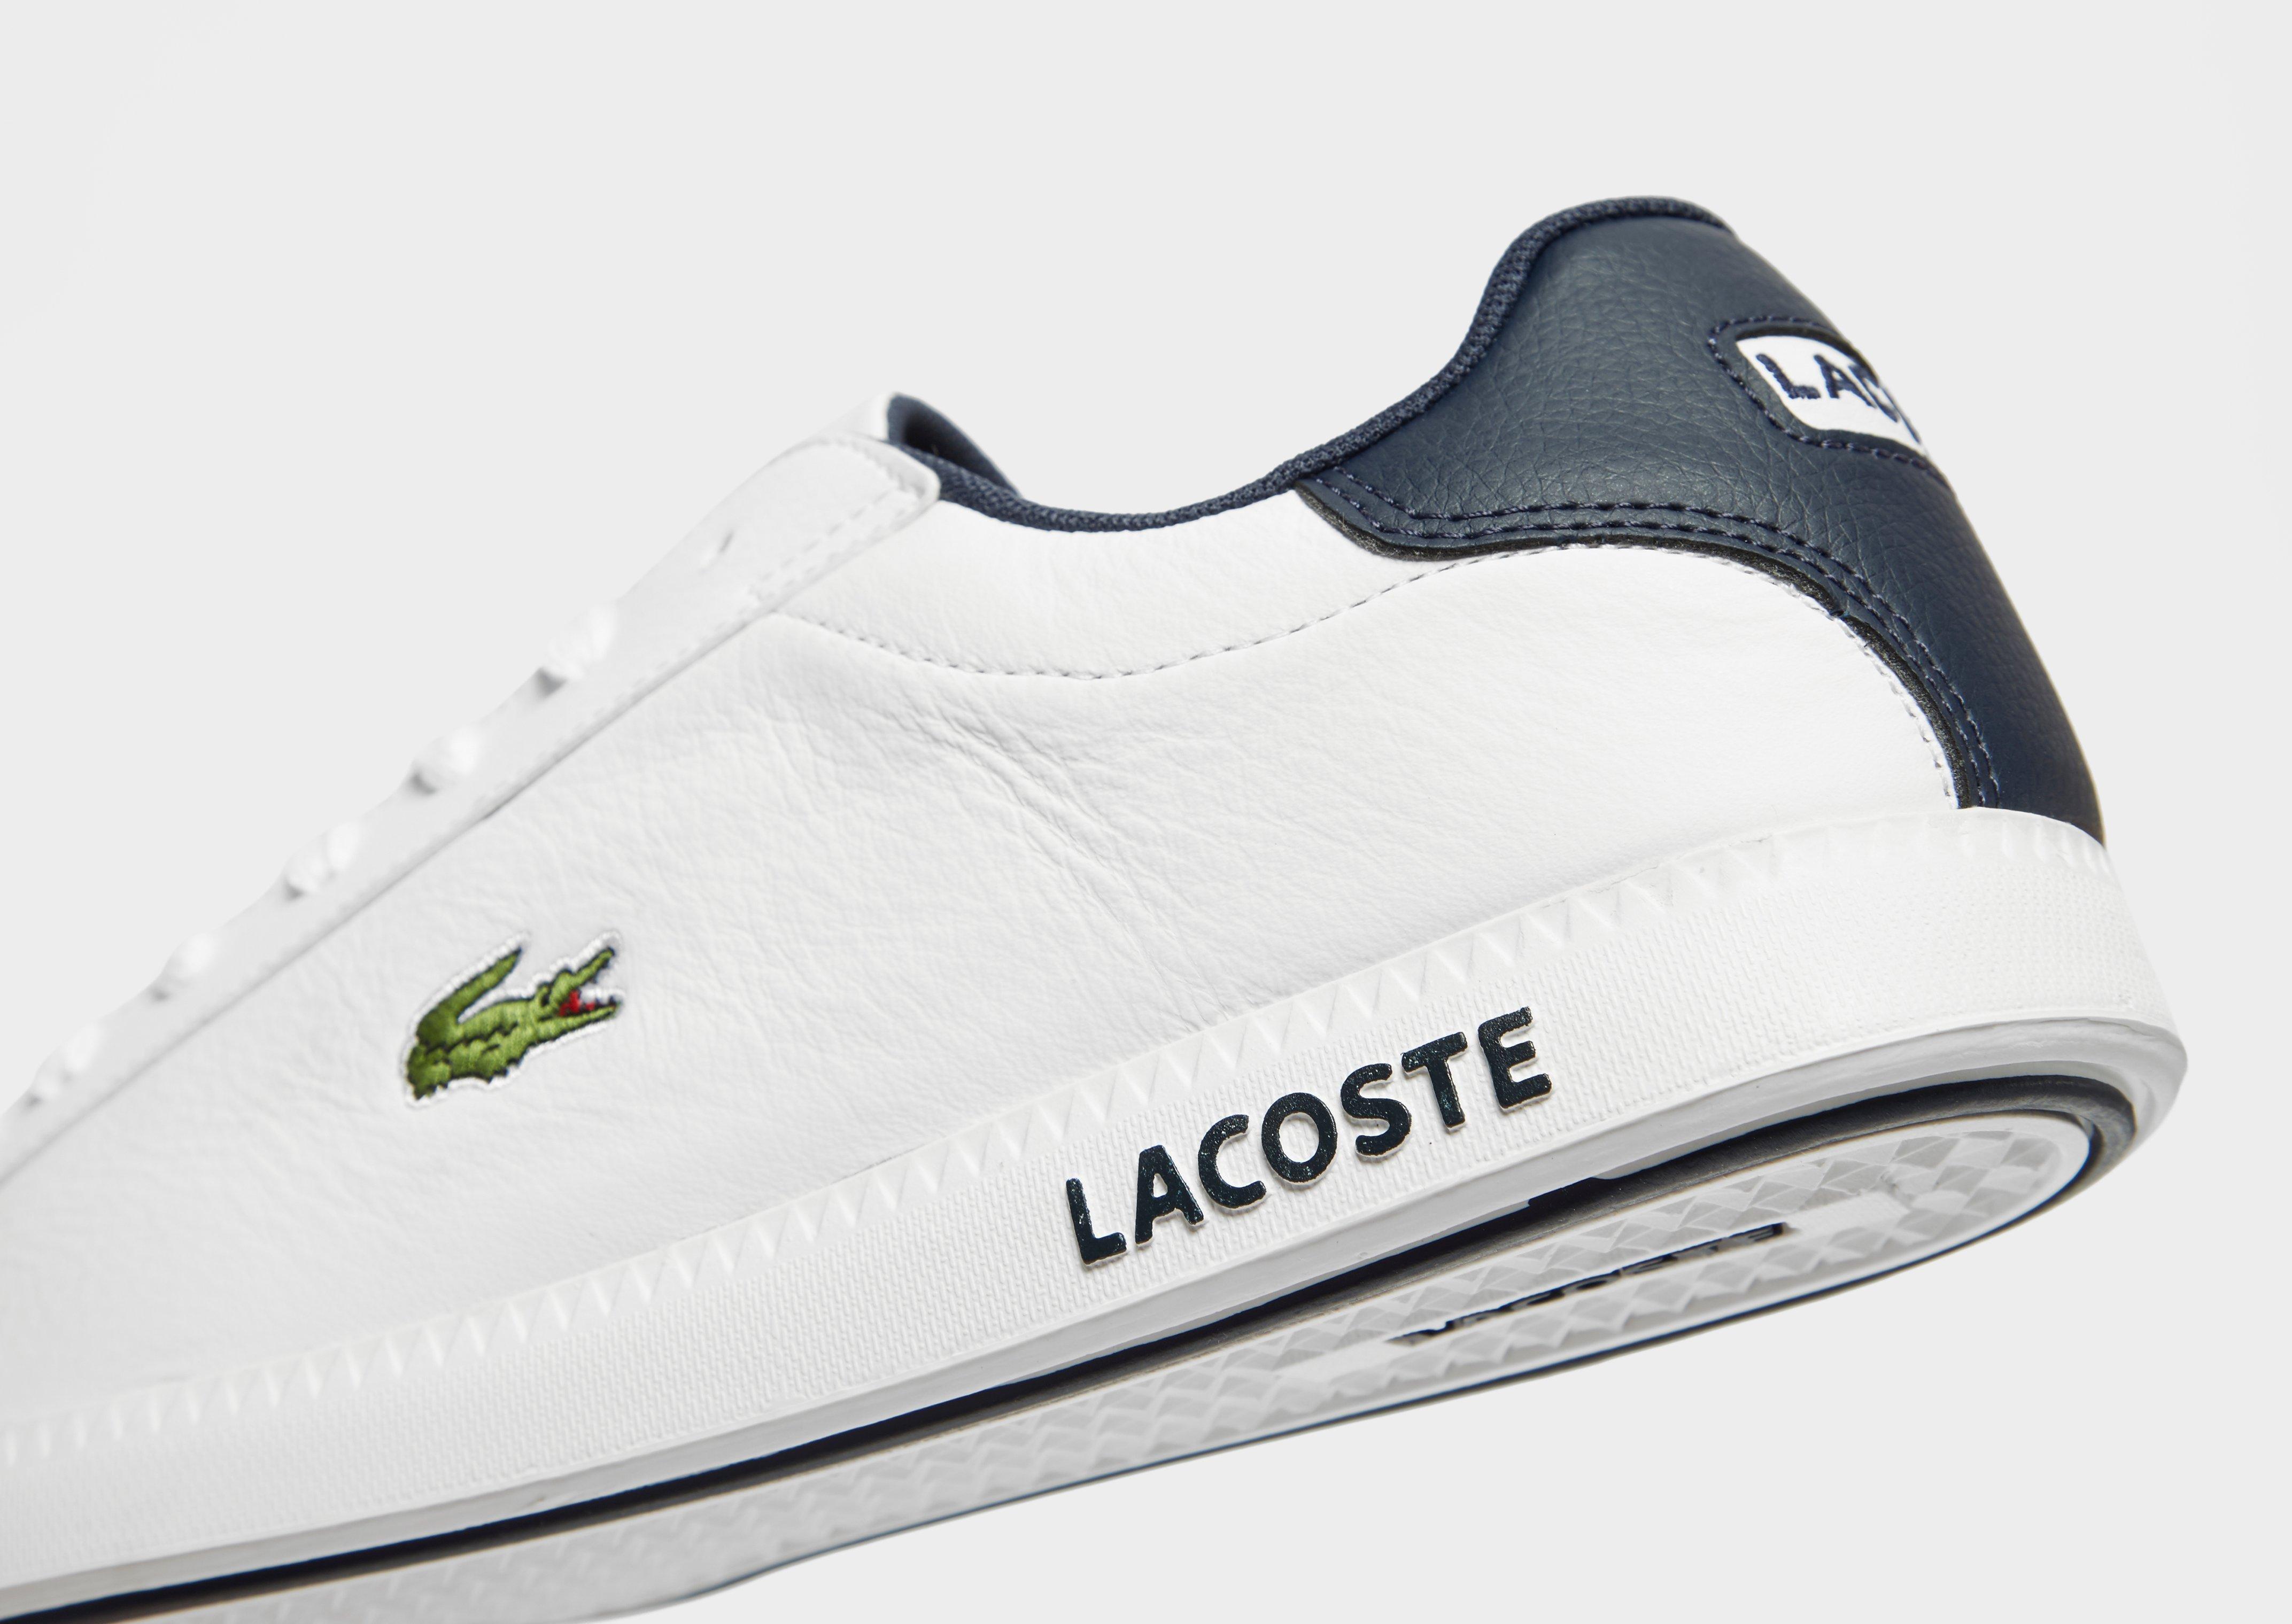 lacoste shoes original vs fake